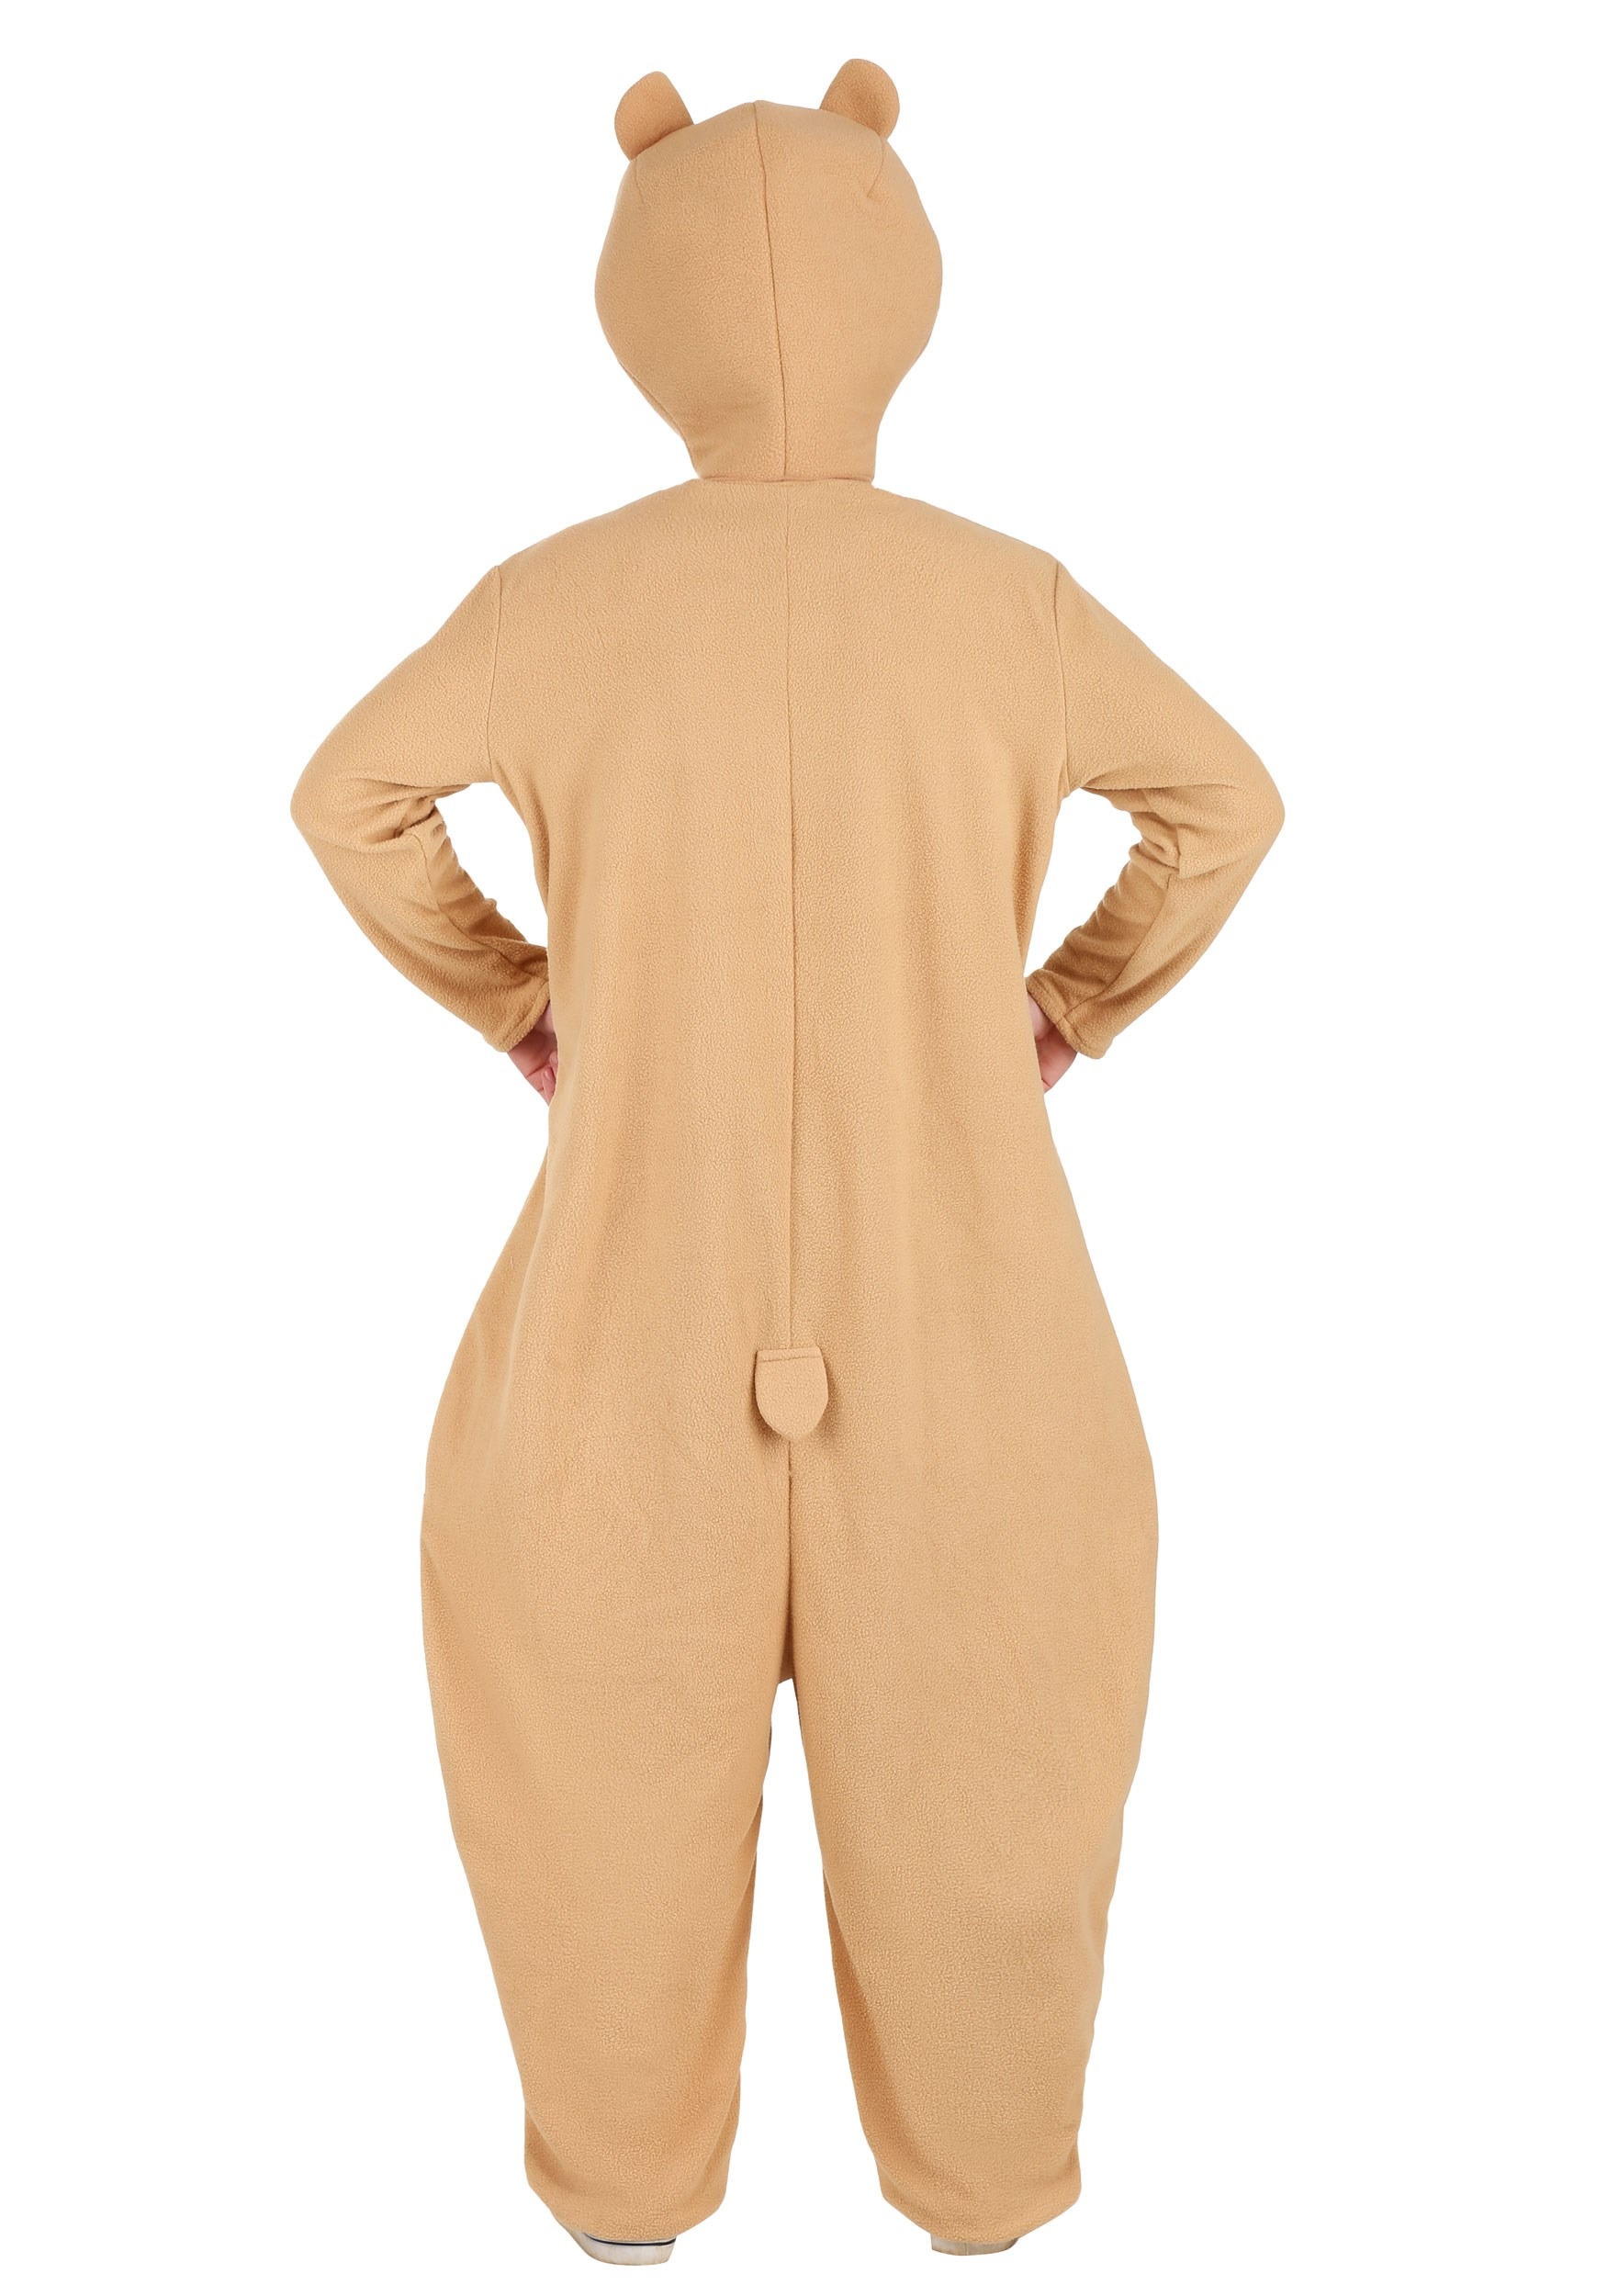 Hamster Costume Adult Funny Hip Hop Halloween Fancy Dress 